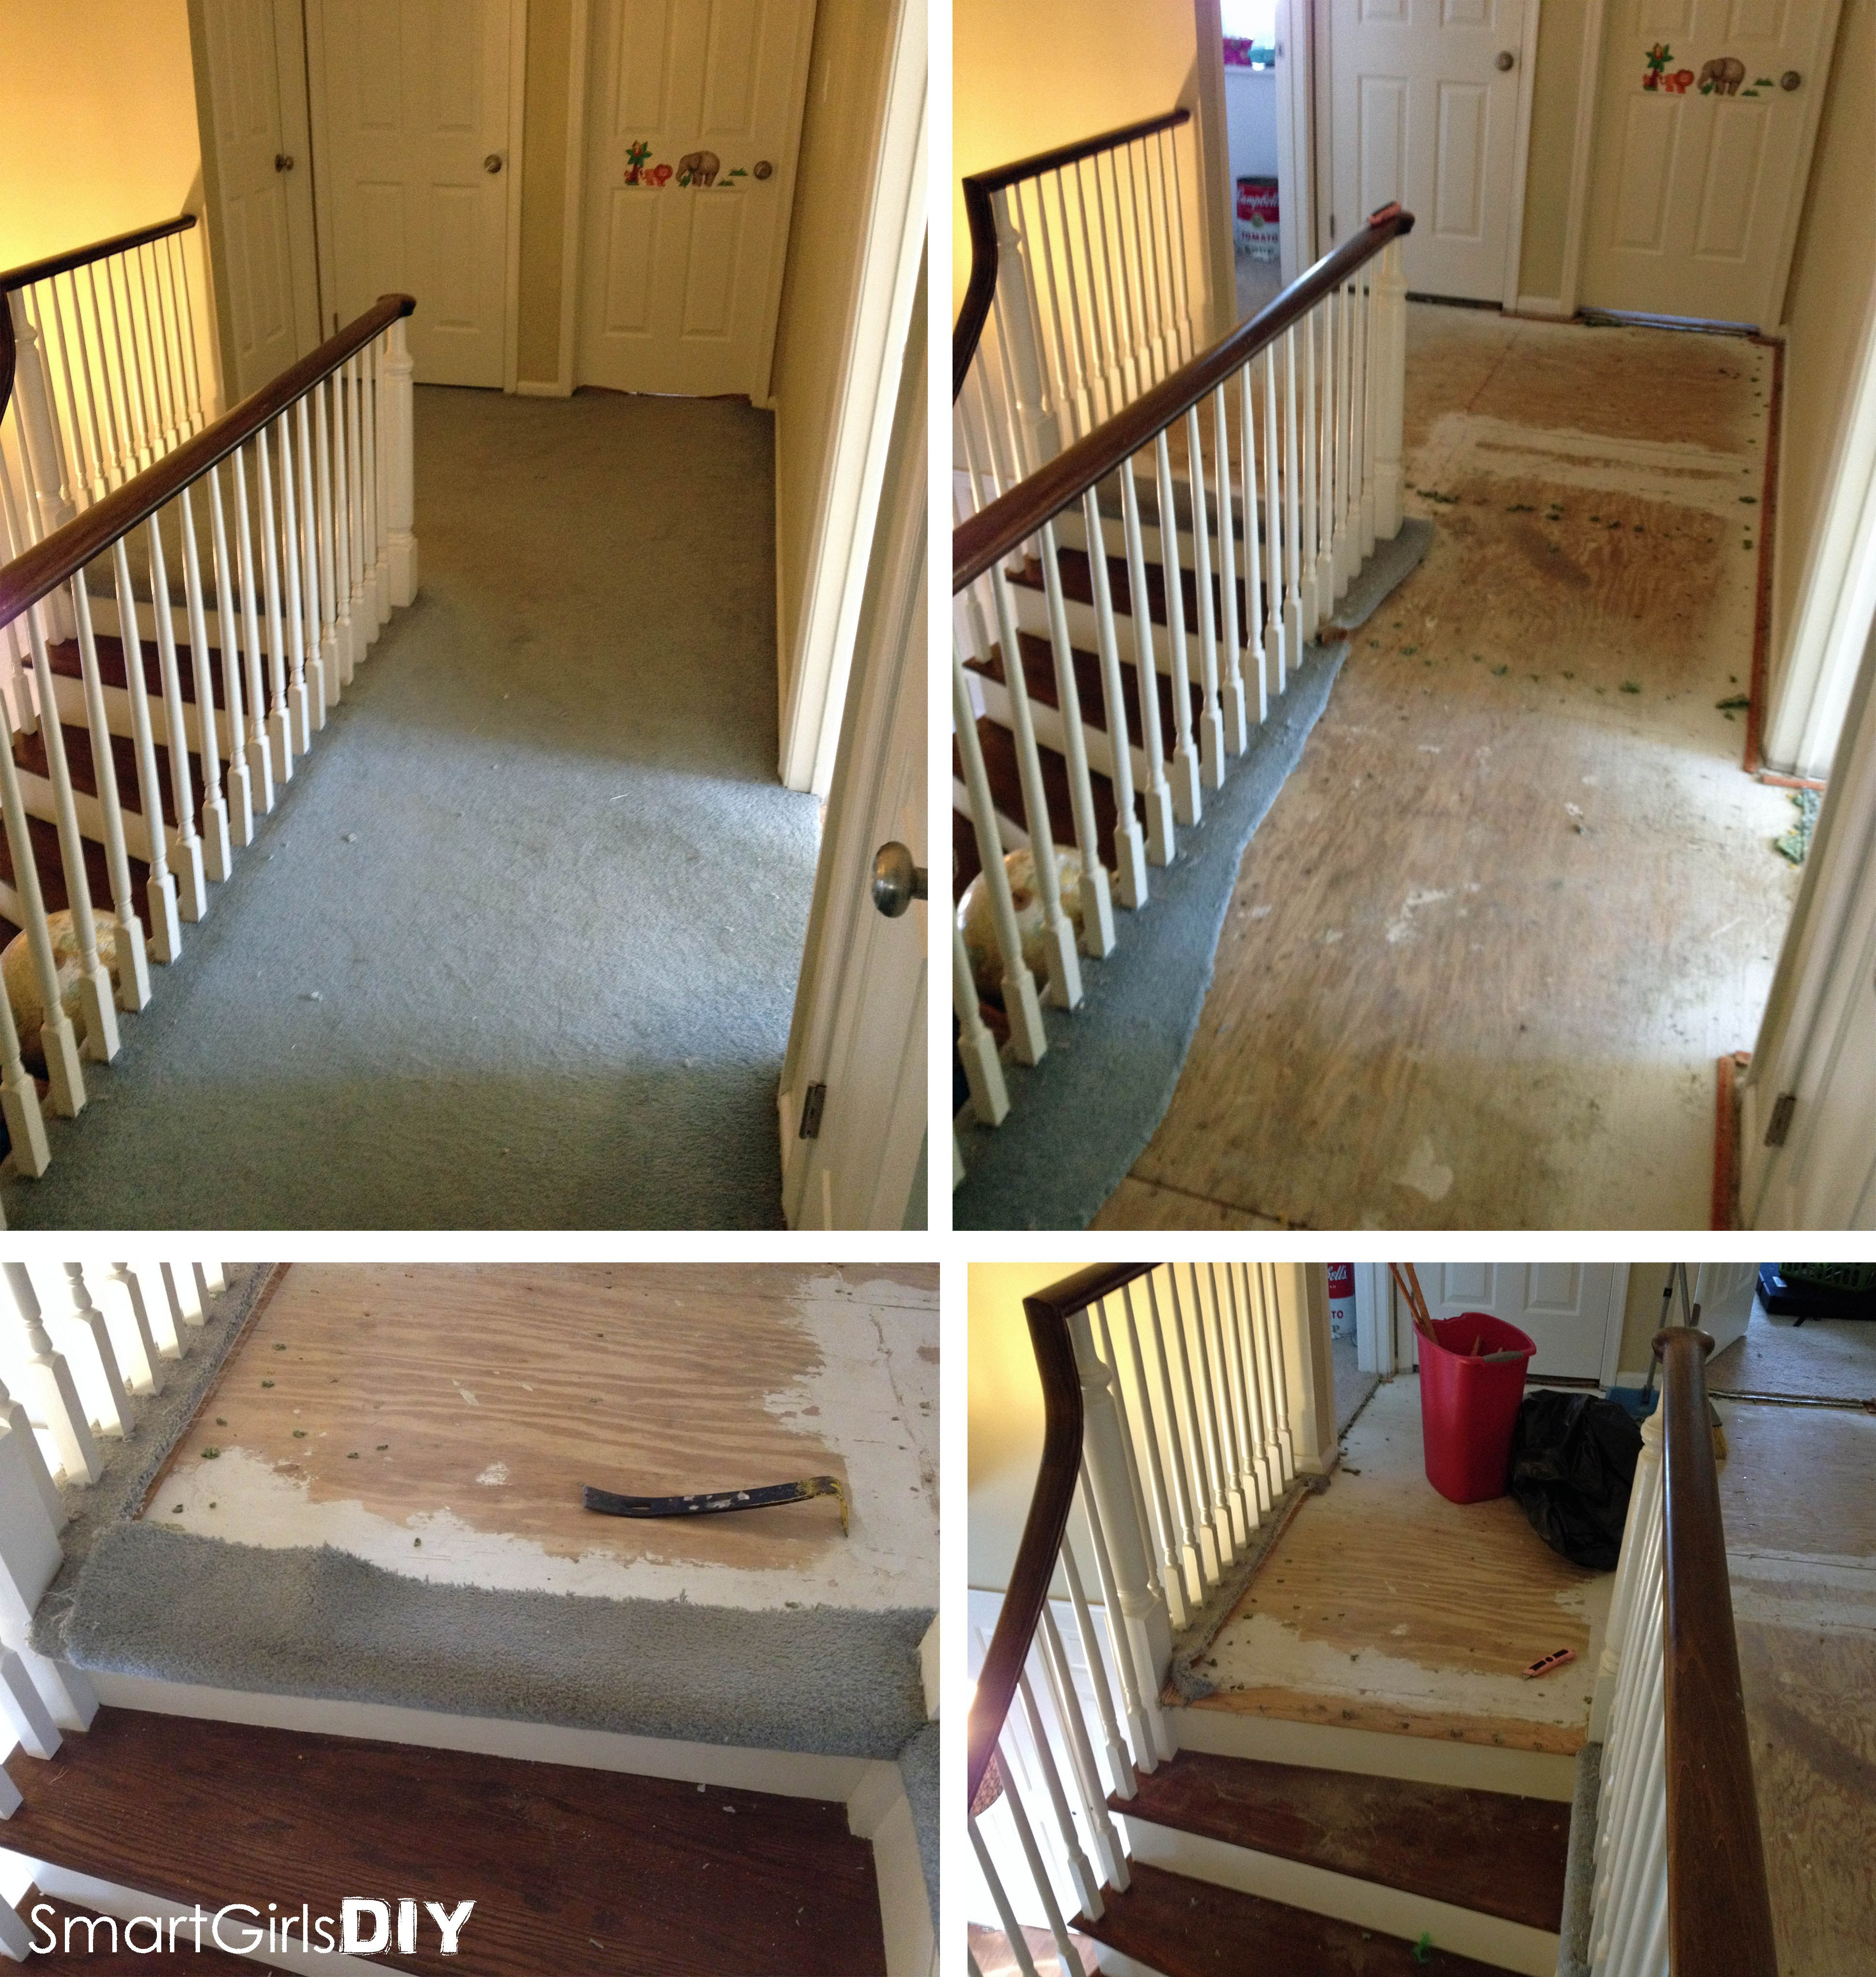 hardwood floor top of stairs of upstairs hallway 1 installing hardwood floors with removing carpet from hallway installing the hardwood floor